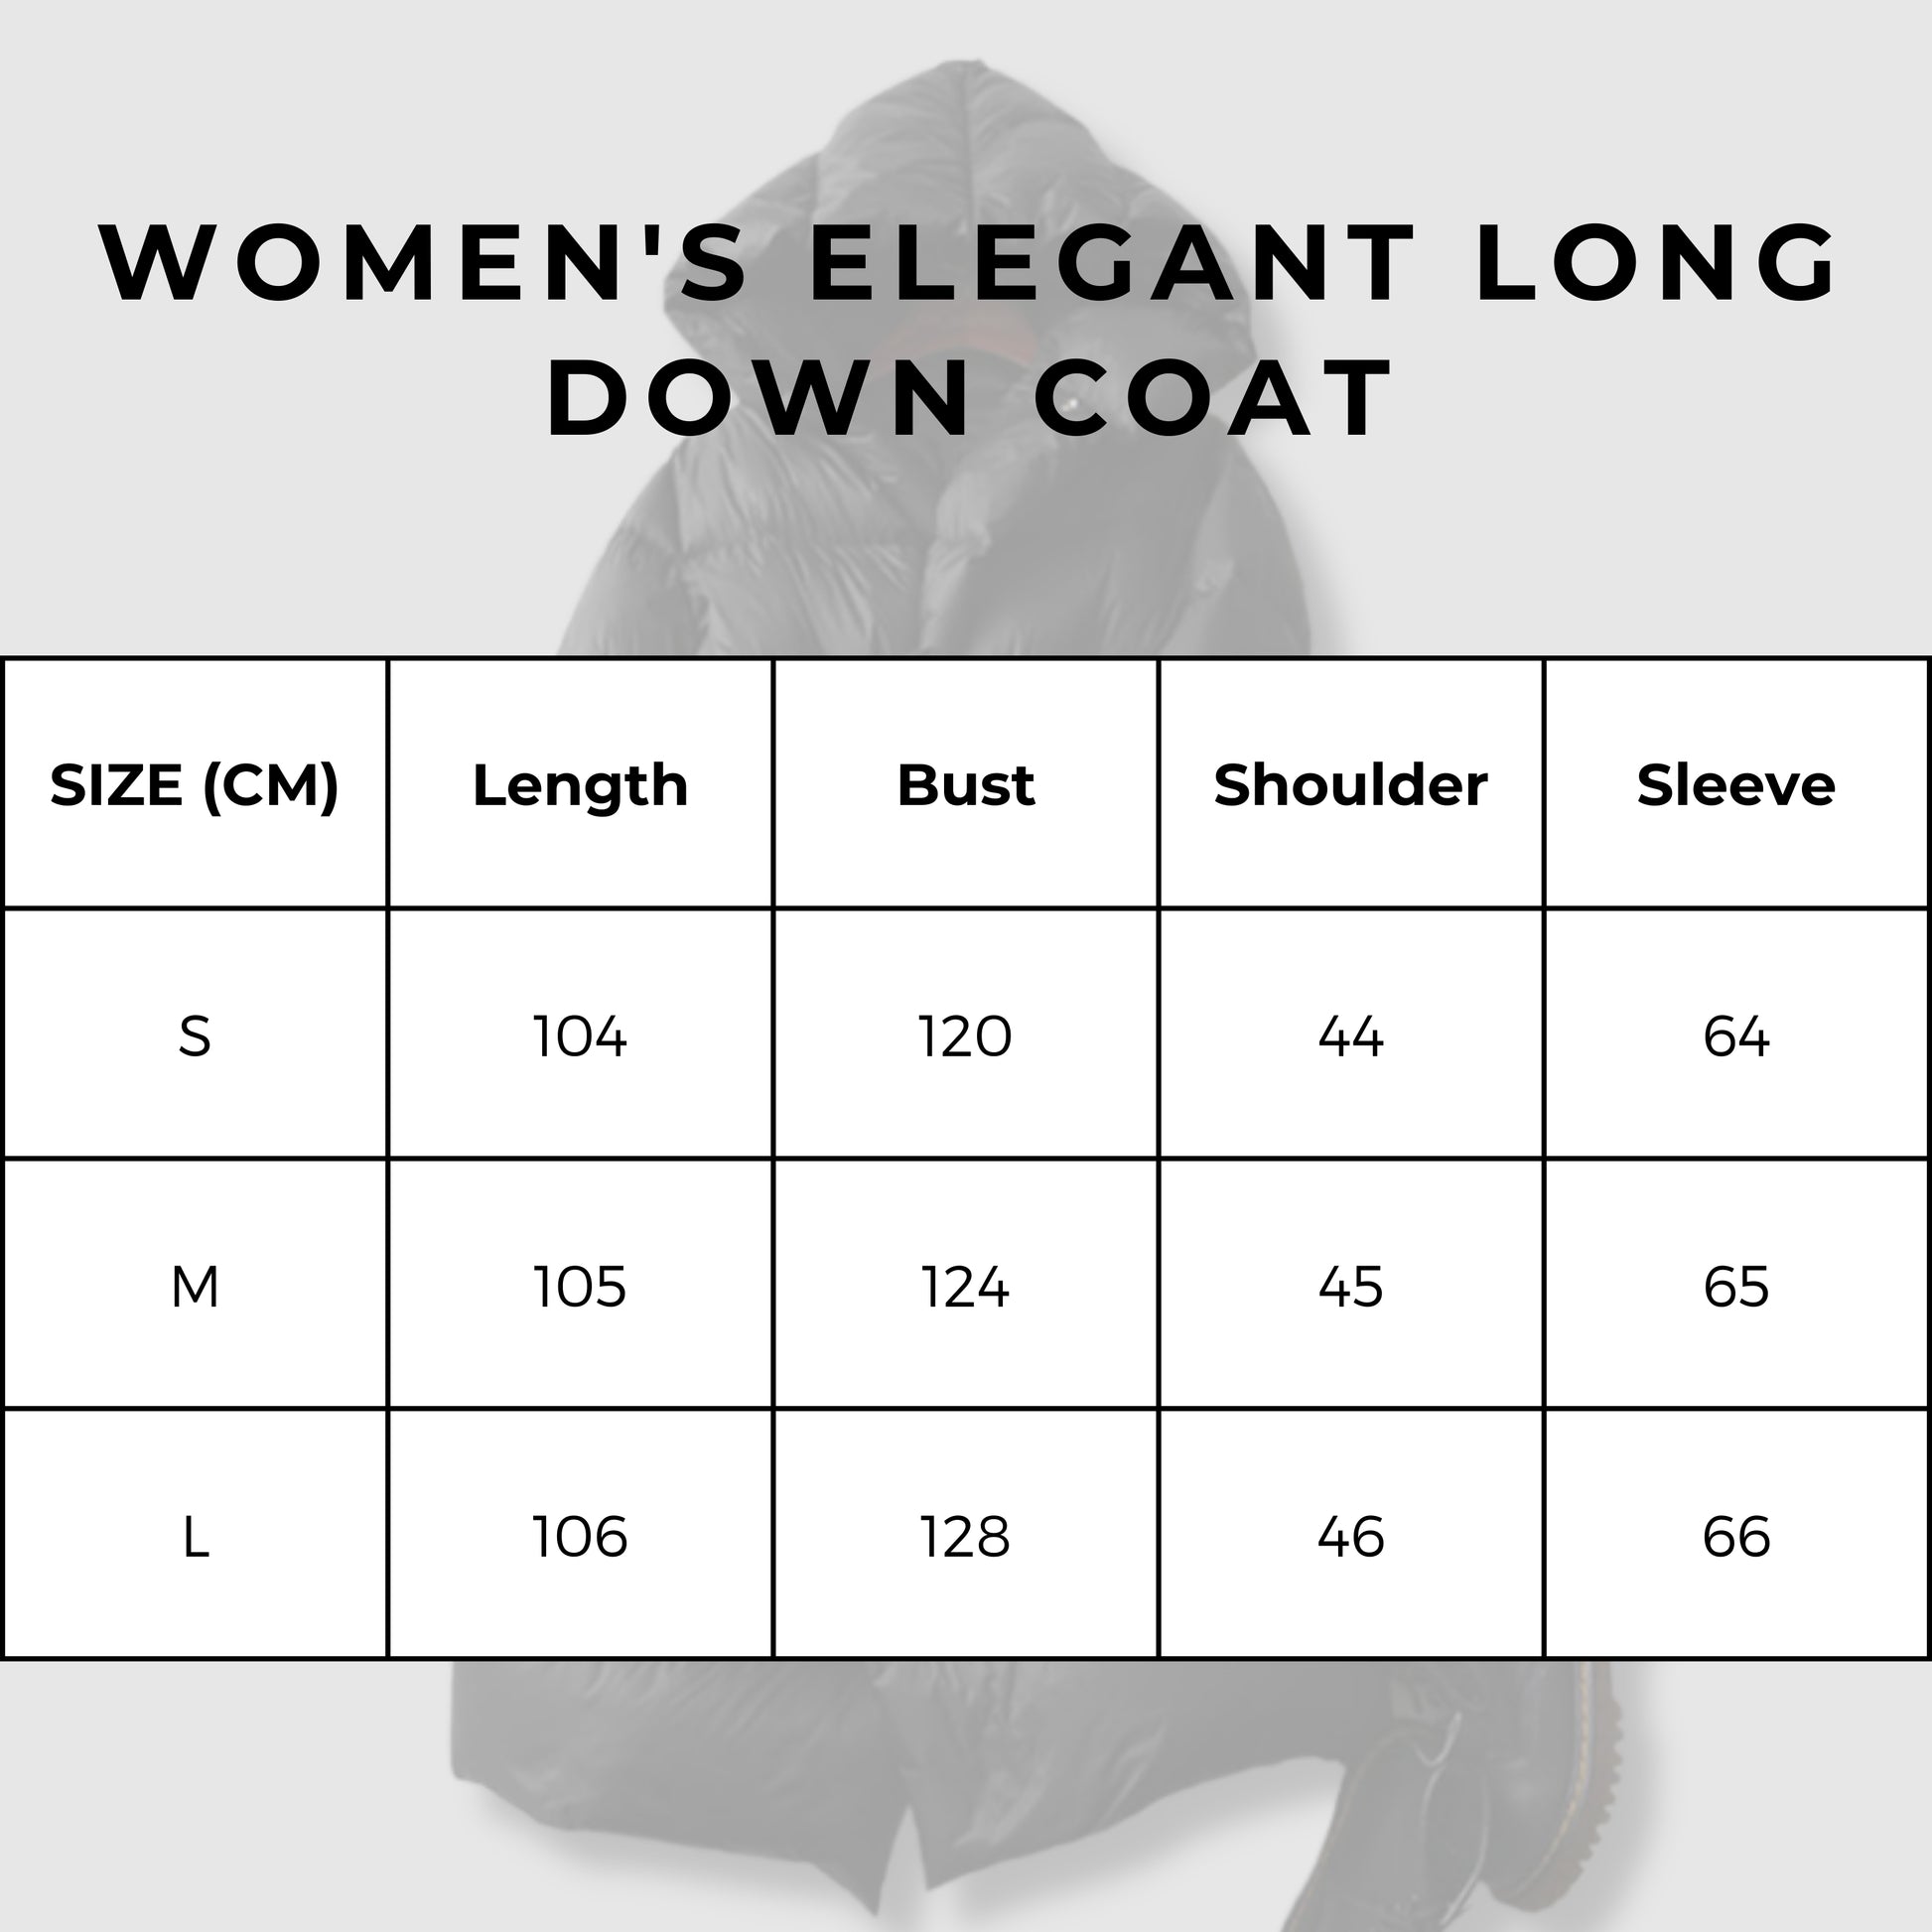 Women's Elegant Long Down Coat size